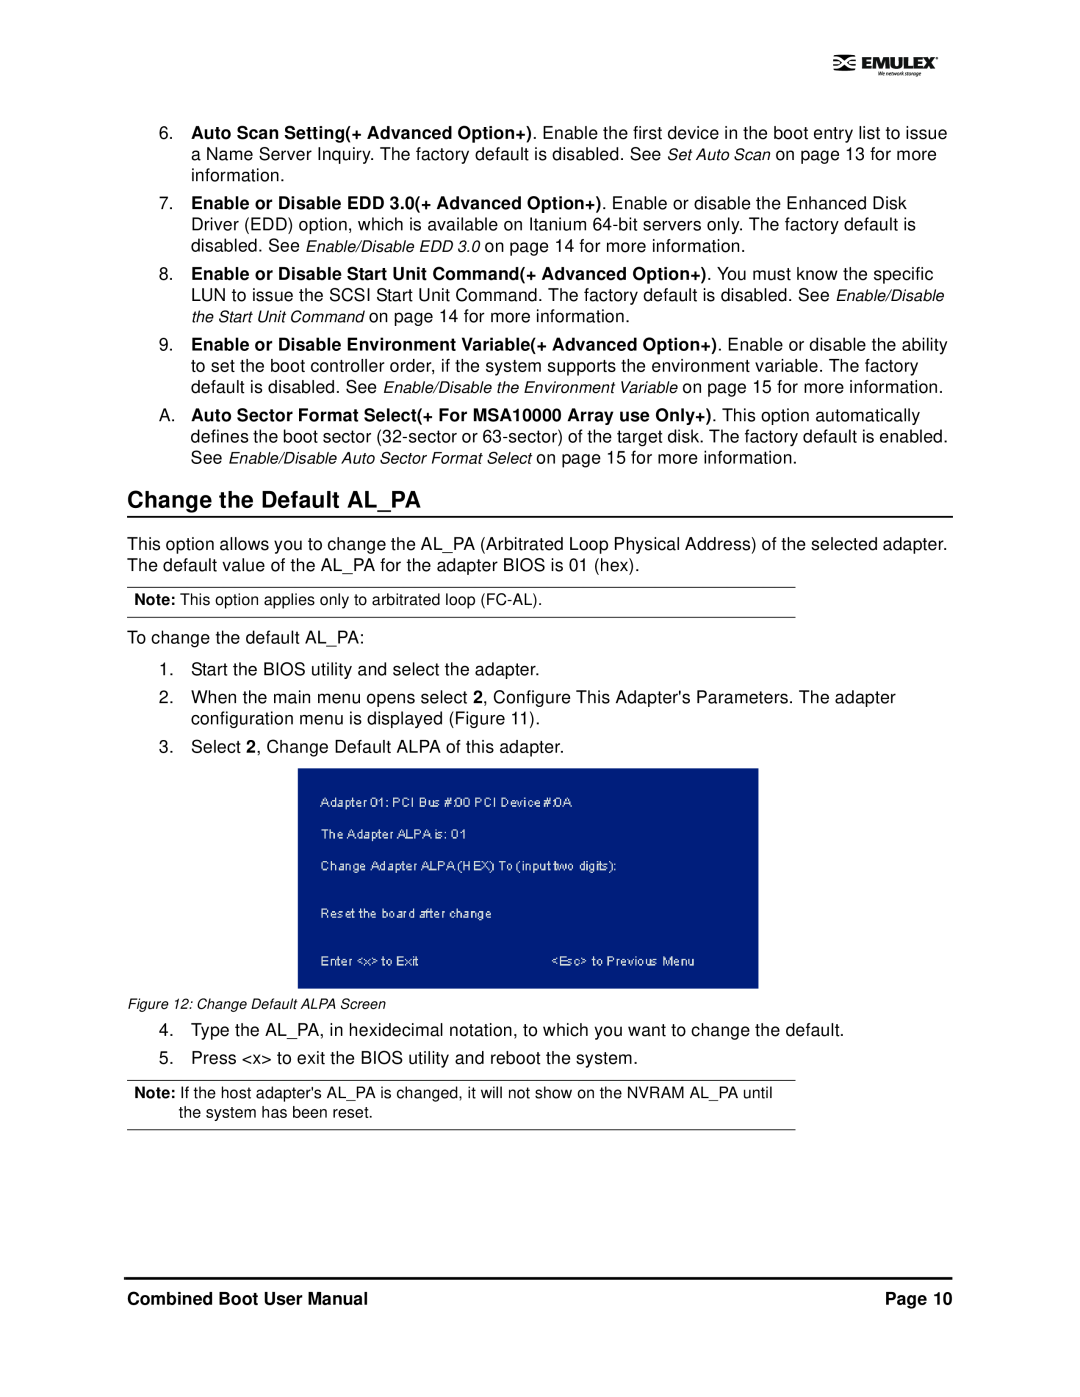 IBM 5.01 user manual Change the Default ALPA, Page 